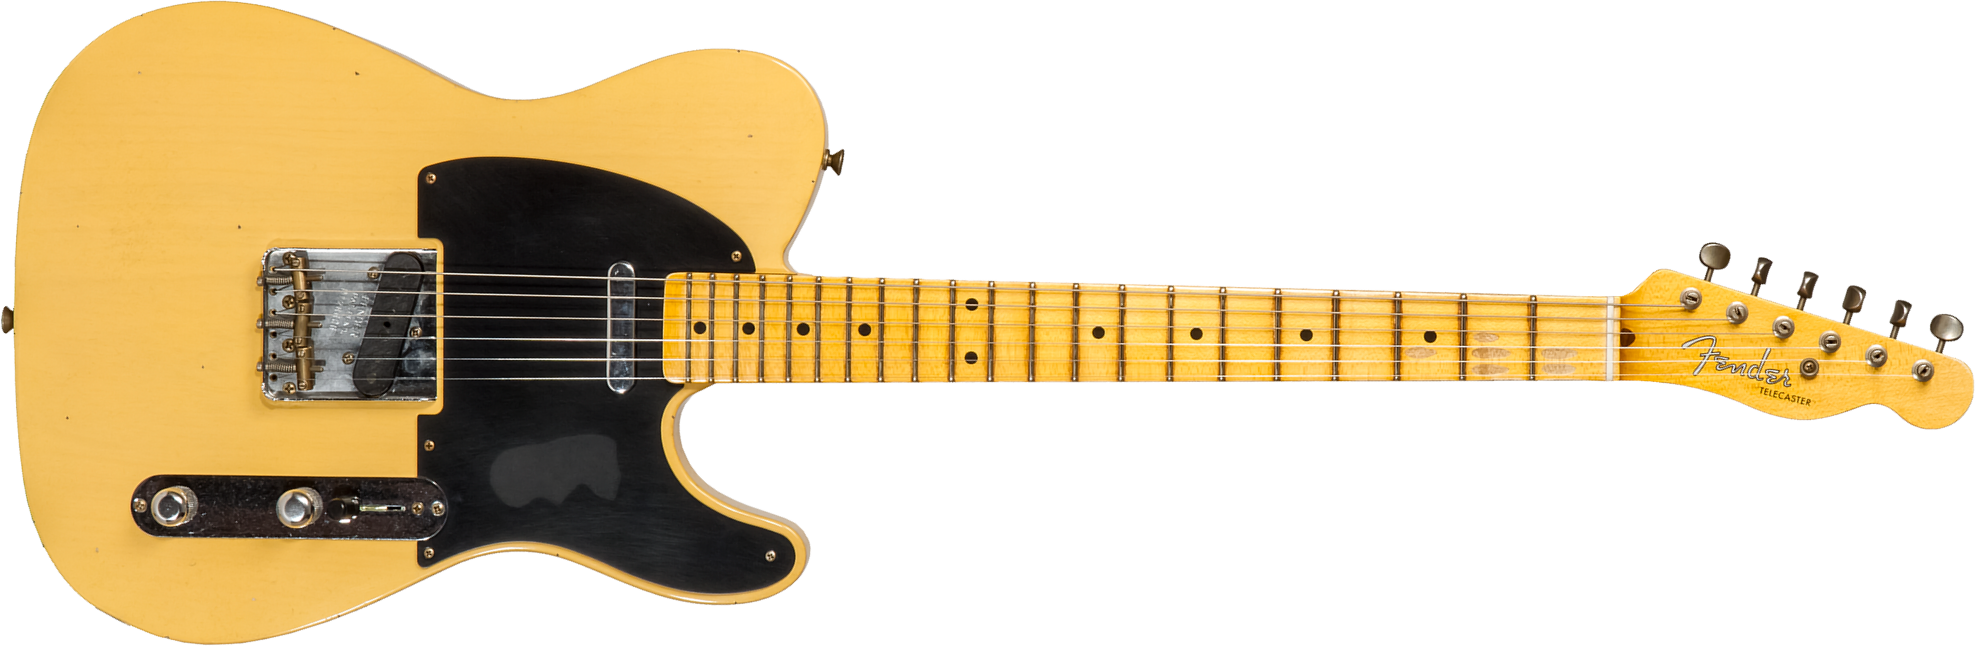 Fender Custom Shop Tele 1953 2s Ht Mn #r128606 - Journeyman Relic Aged Nocaster Blonde - Televorm elektrische gitaar - Main picture